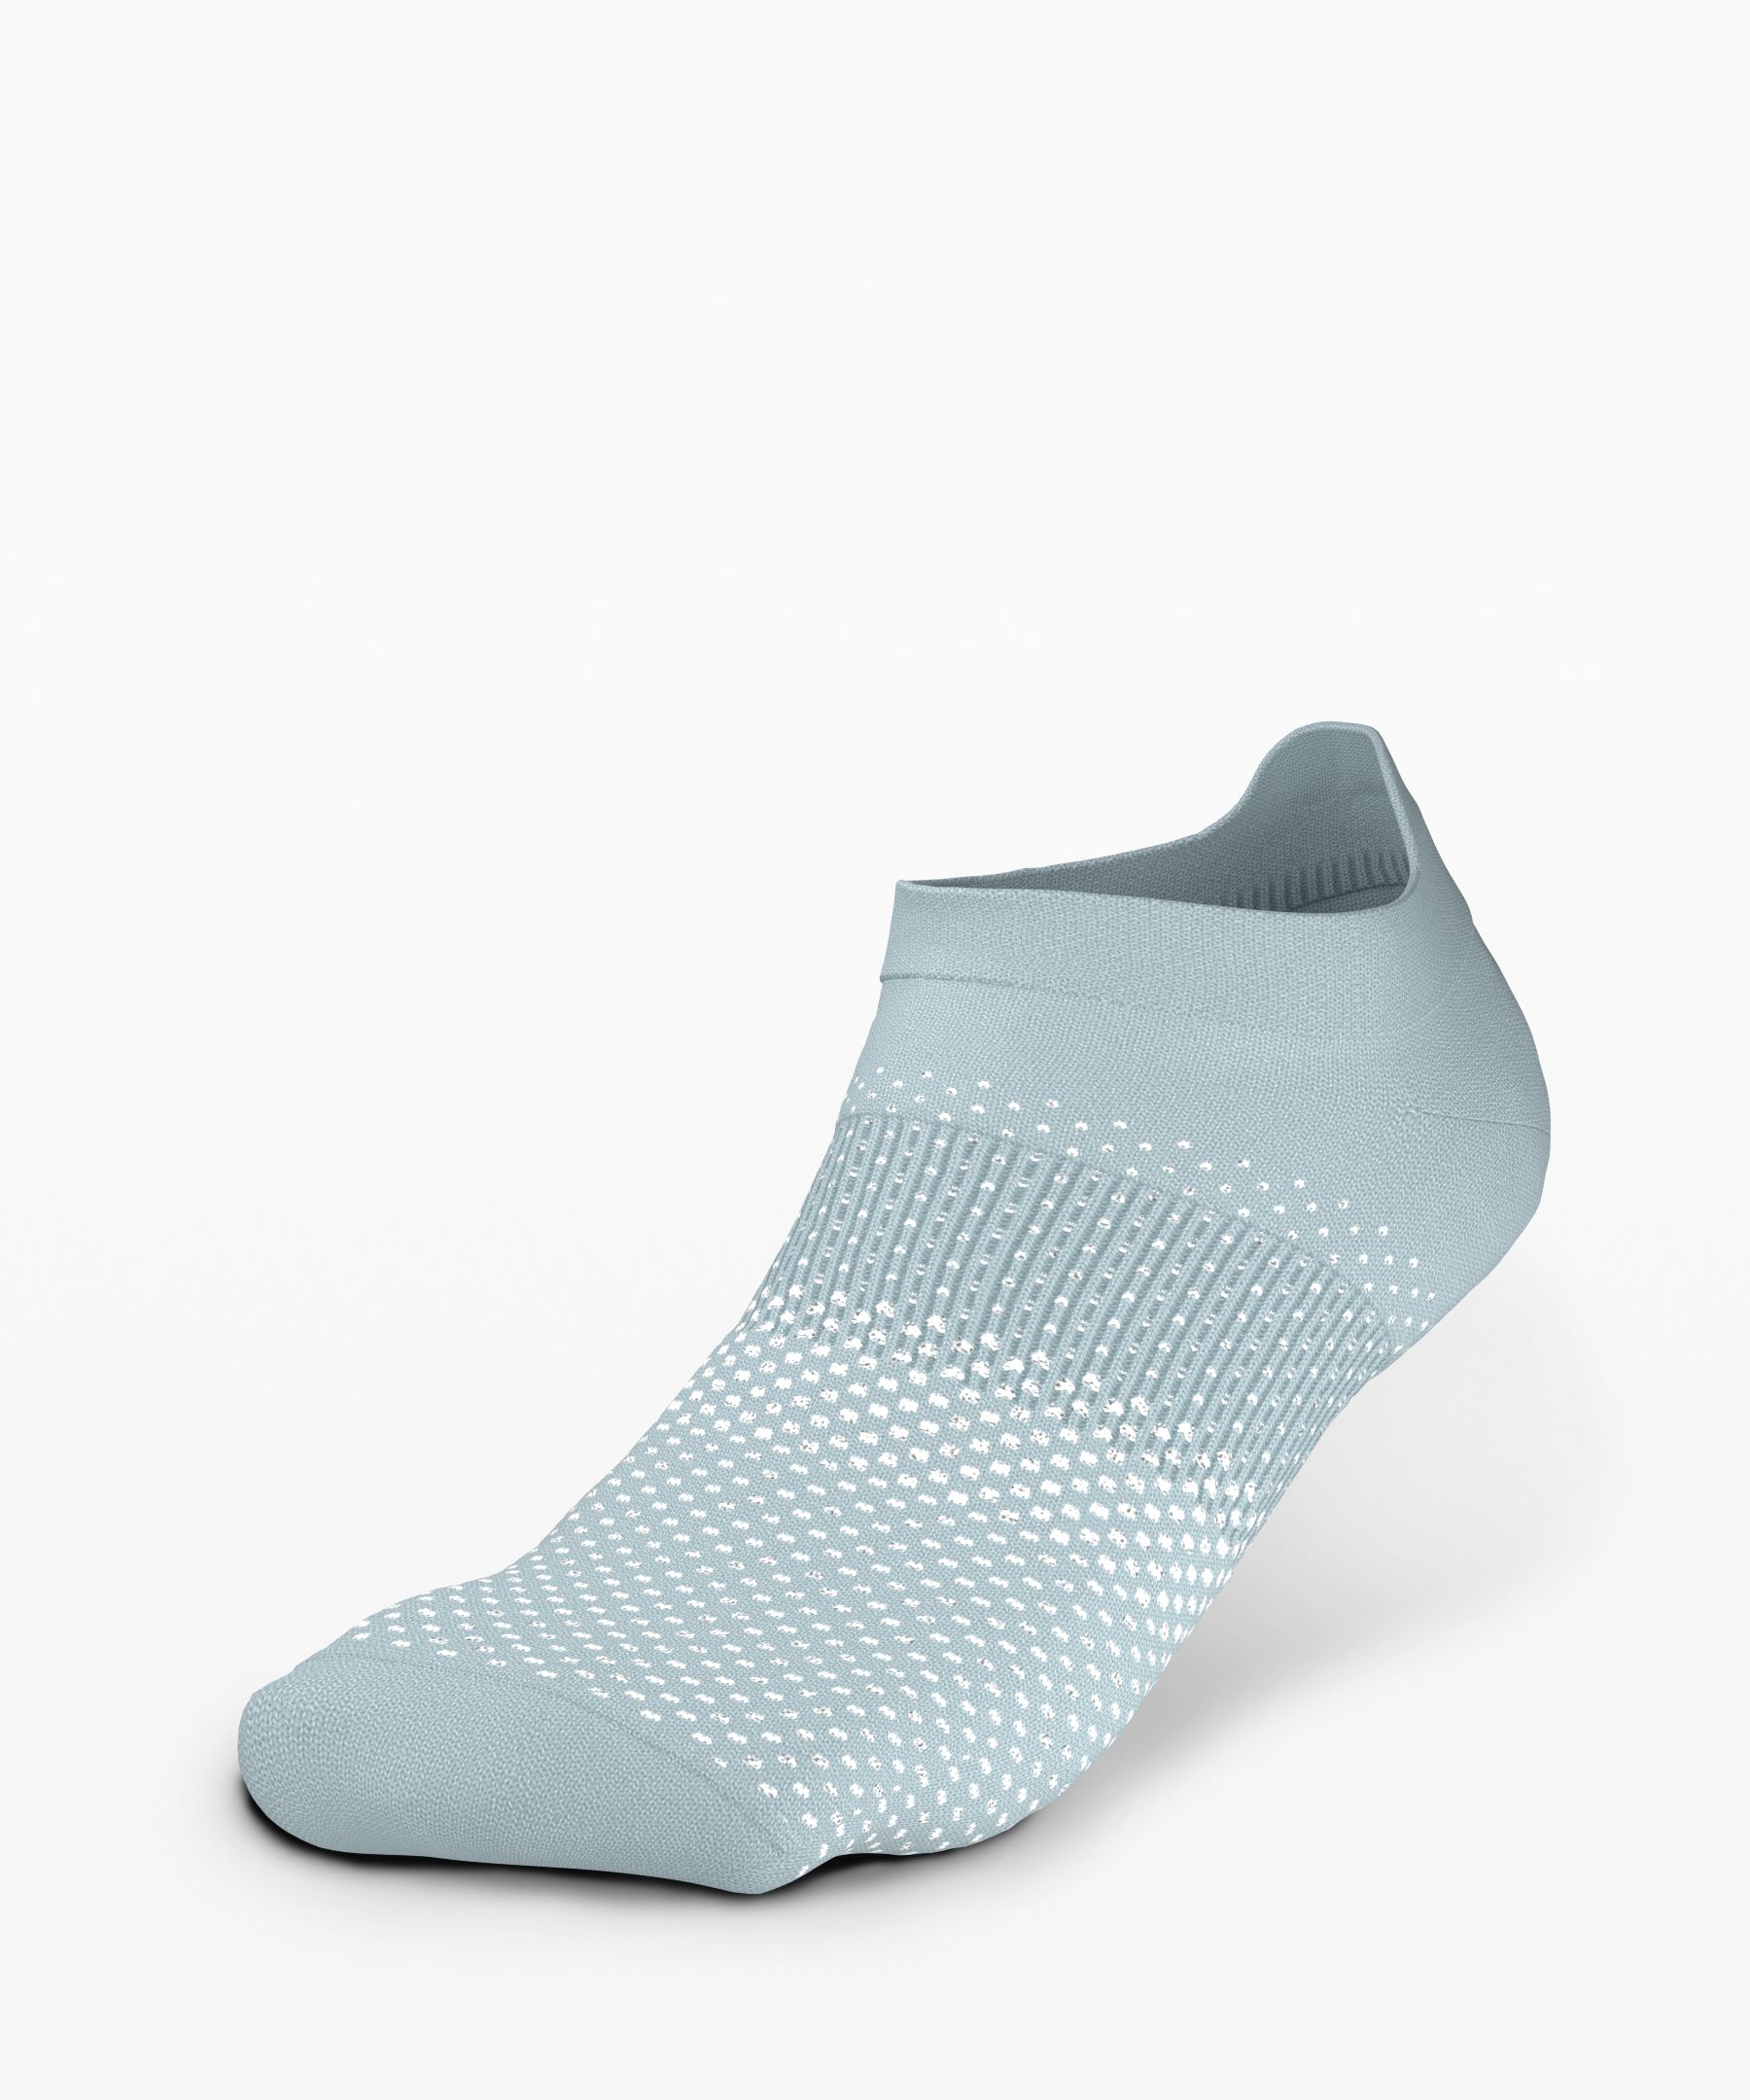 lululemon silver socks